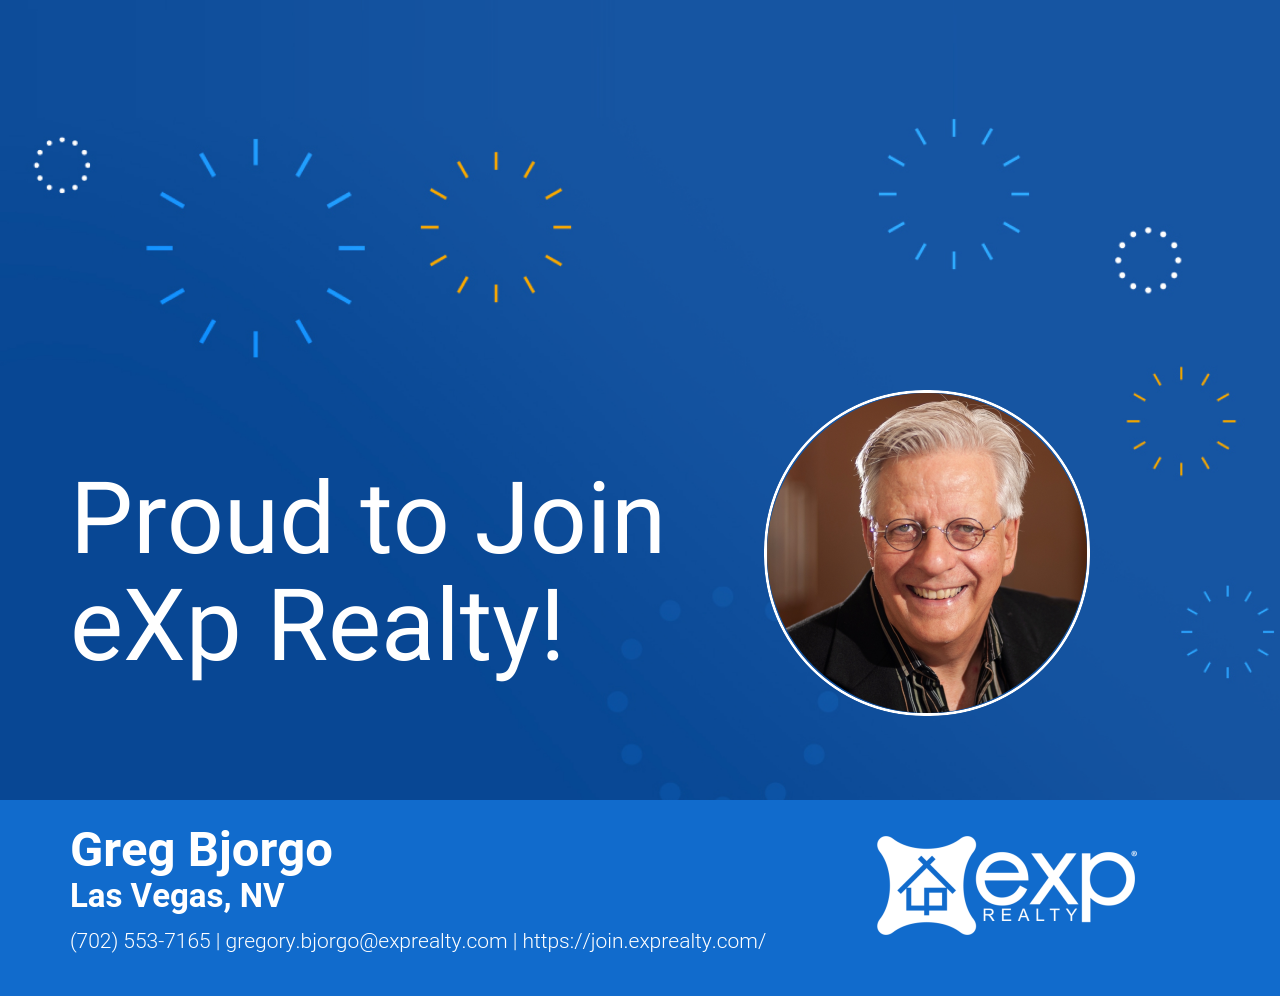 Greg Bjorgo Joined eXp Realty!